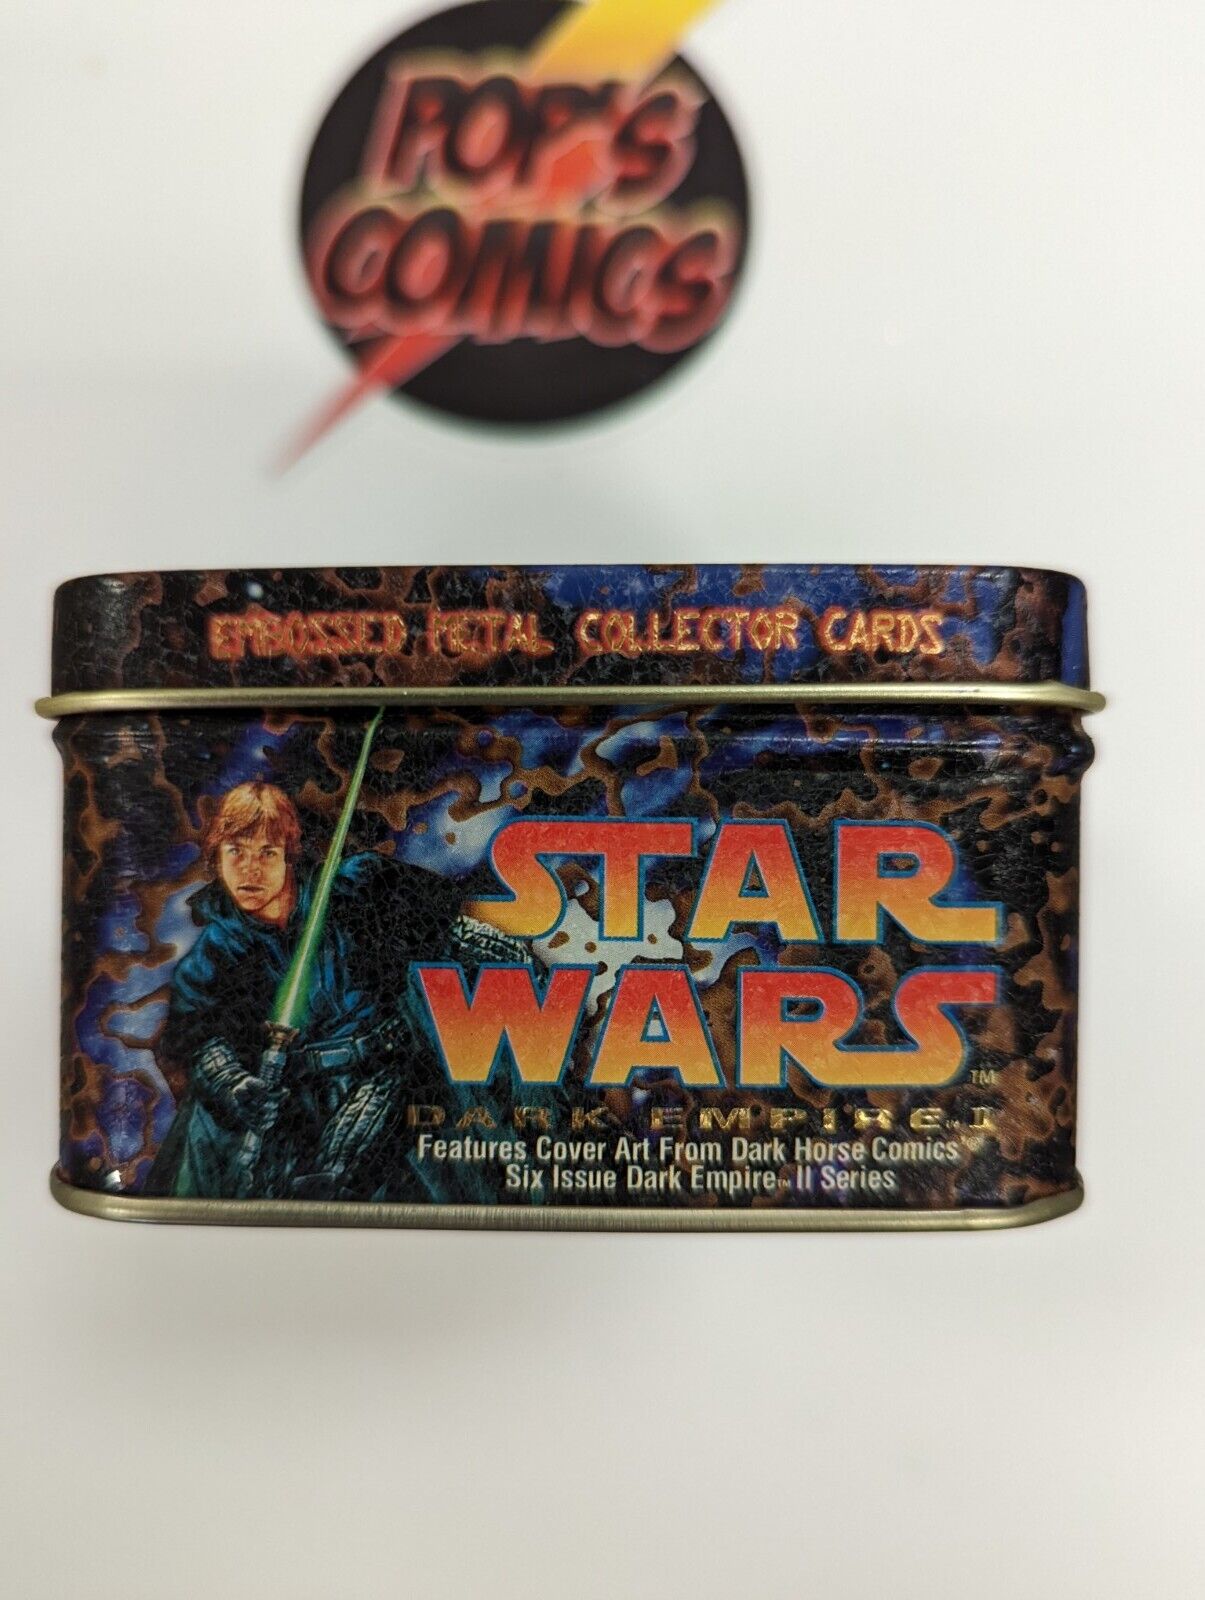 Star Wars Dark Empire II Embossed Metal Collector Cards Metallic Impressions